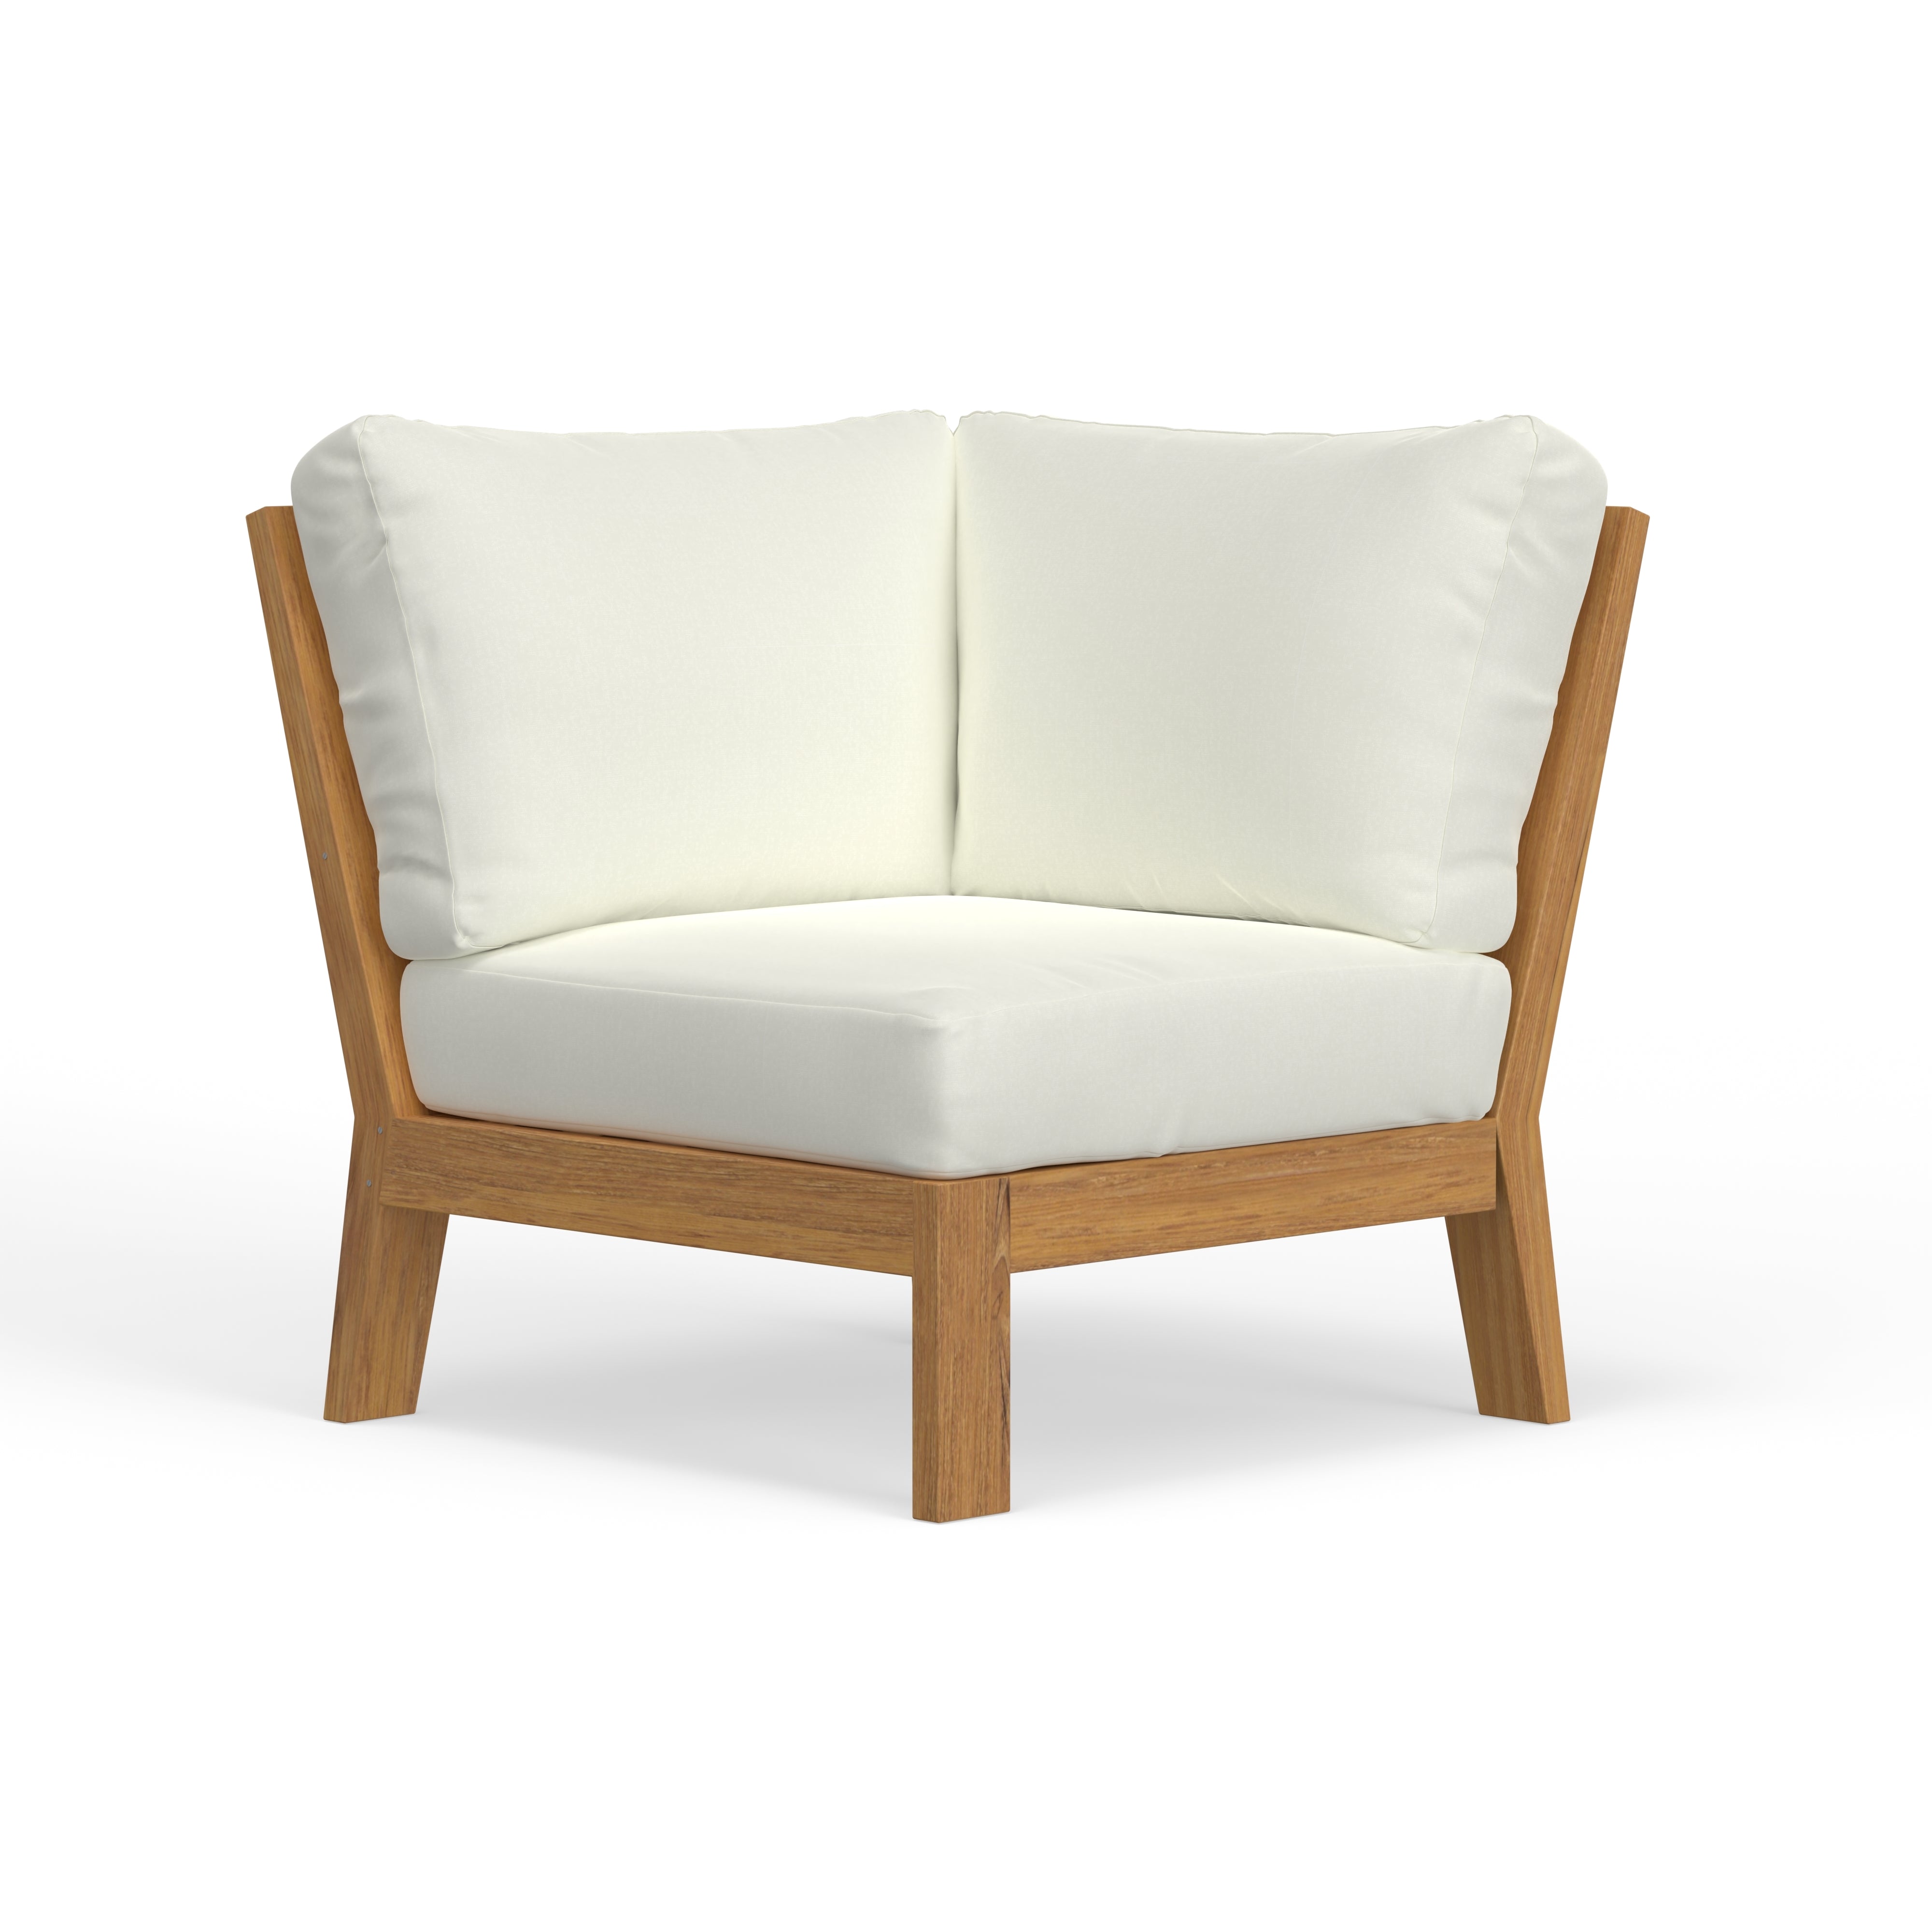 Modular Luxury Outdoor Sofa